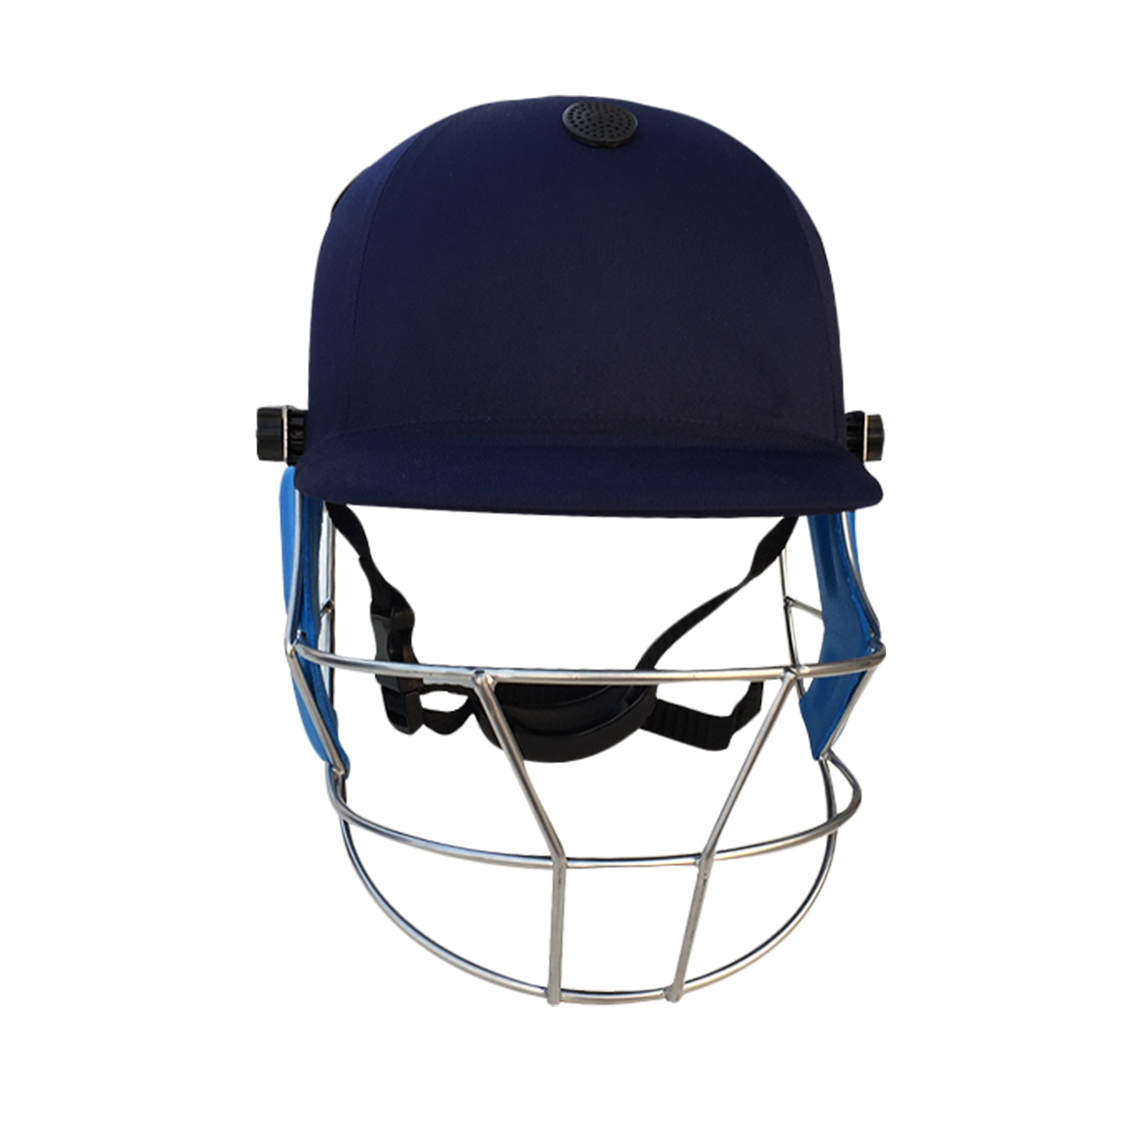 GA Supreme Cricket Helmet